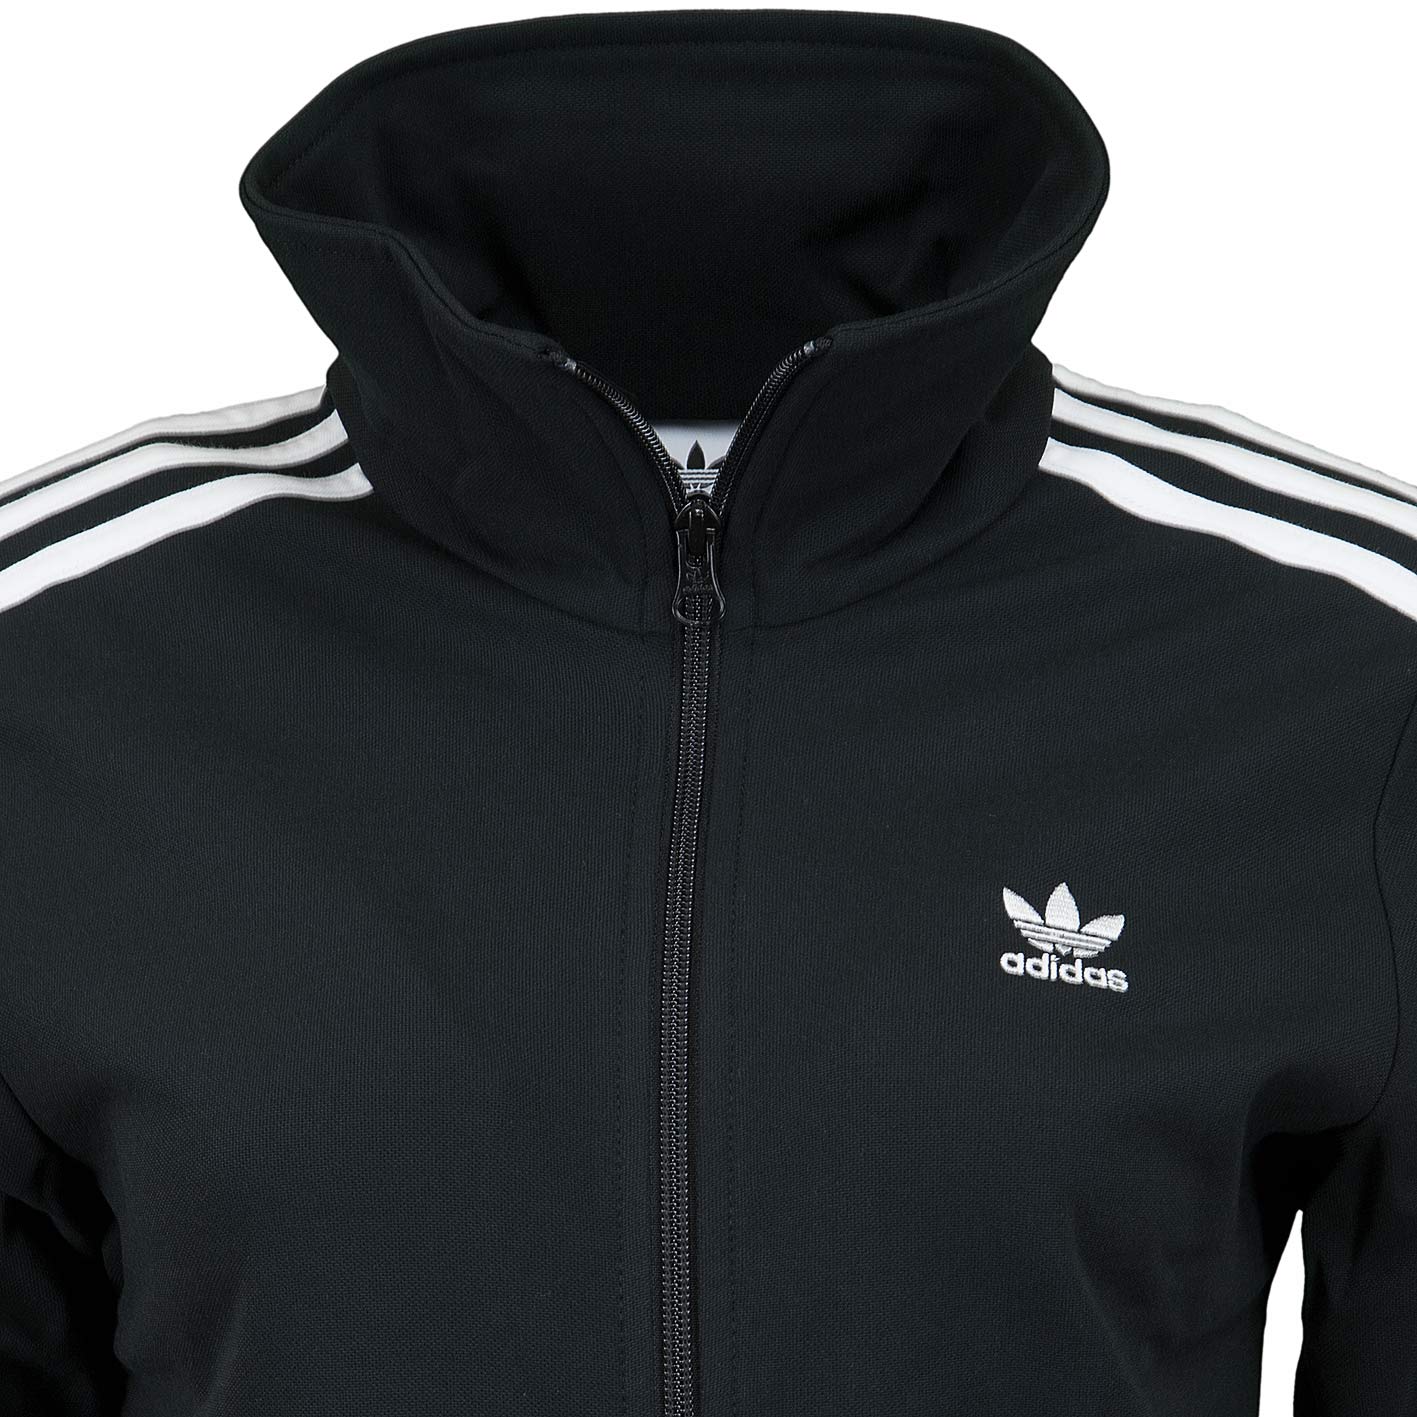 ☆ Adidas Originals Damen Trainingsjacke TT schwarz/weiß - hier bestellen!